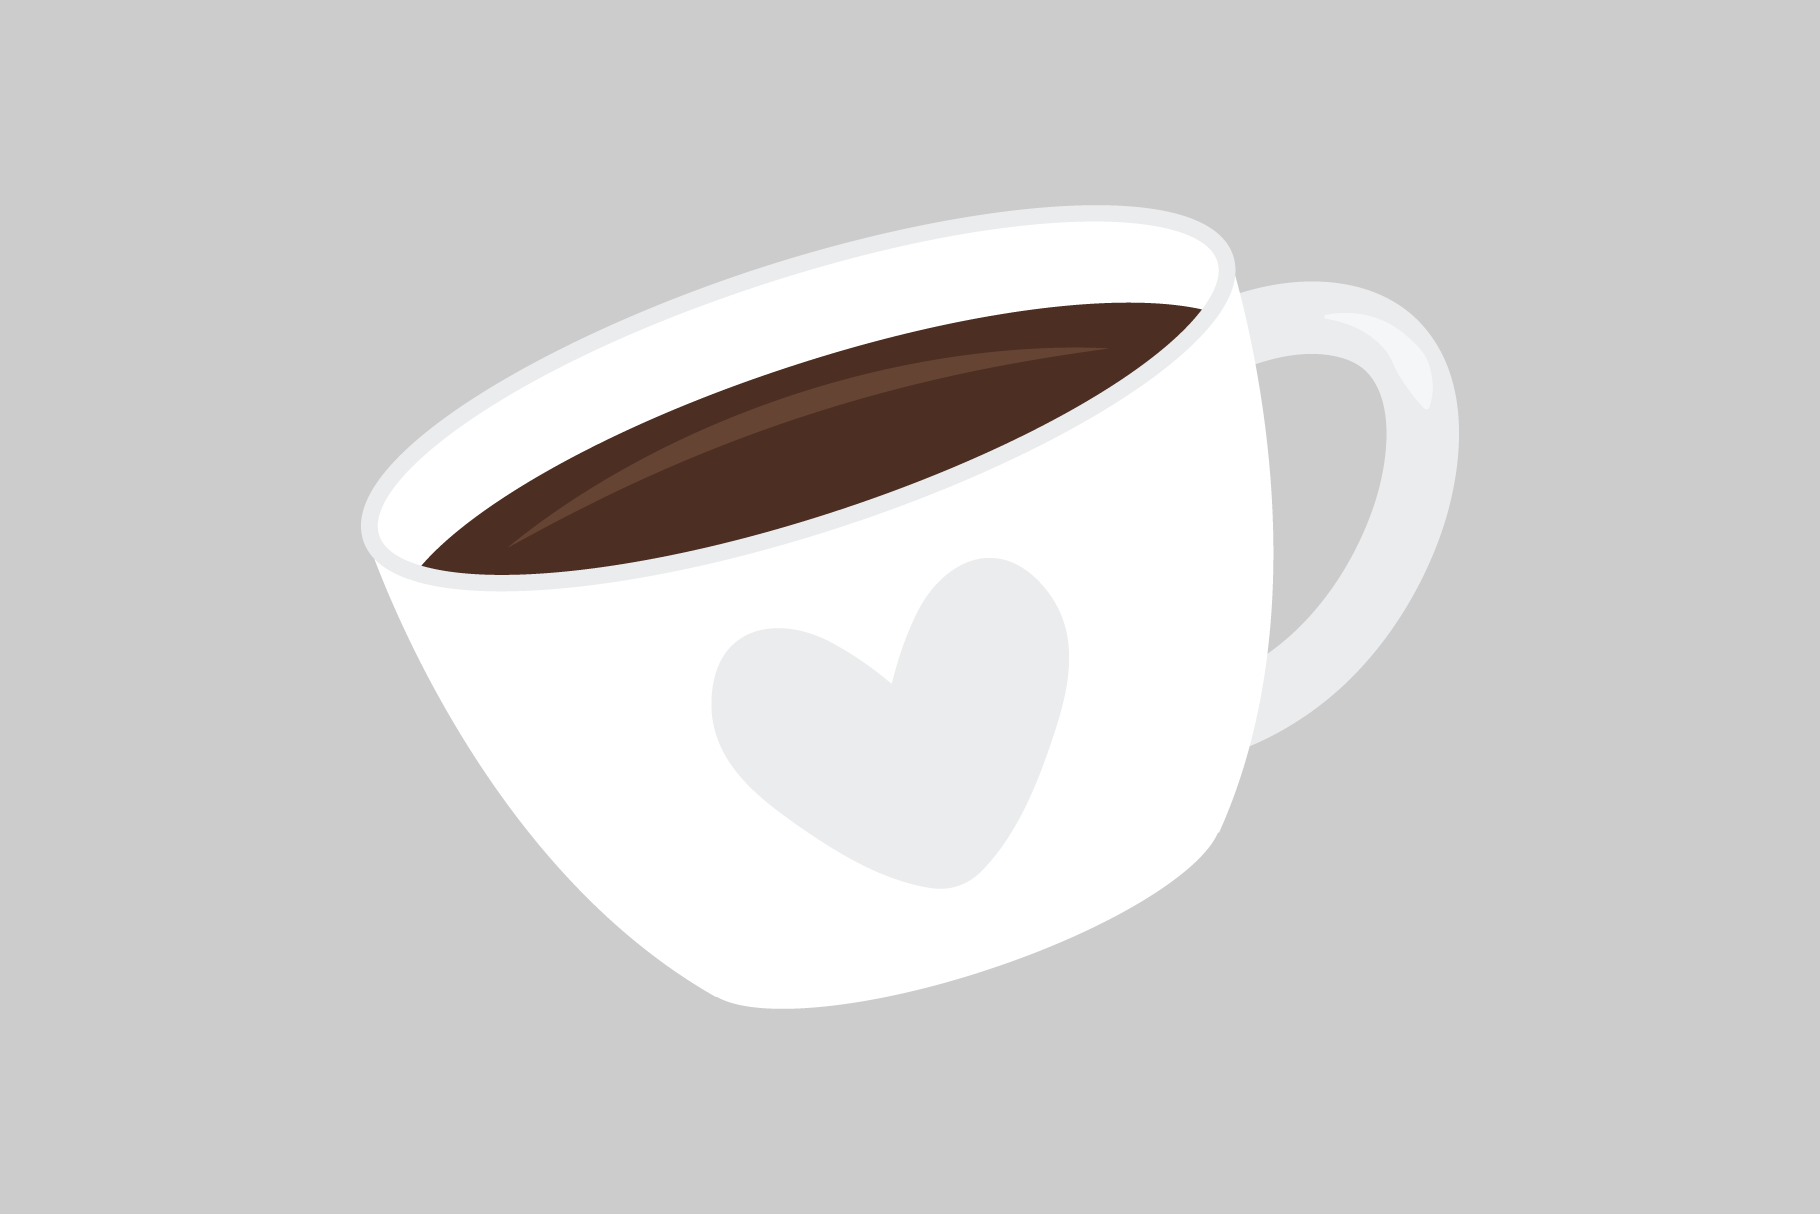 Cute Coffee Mugs Clip Art Set – Daily Art Hub // Graphics